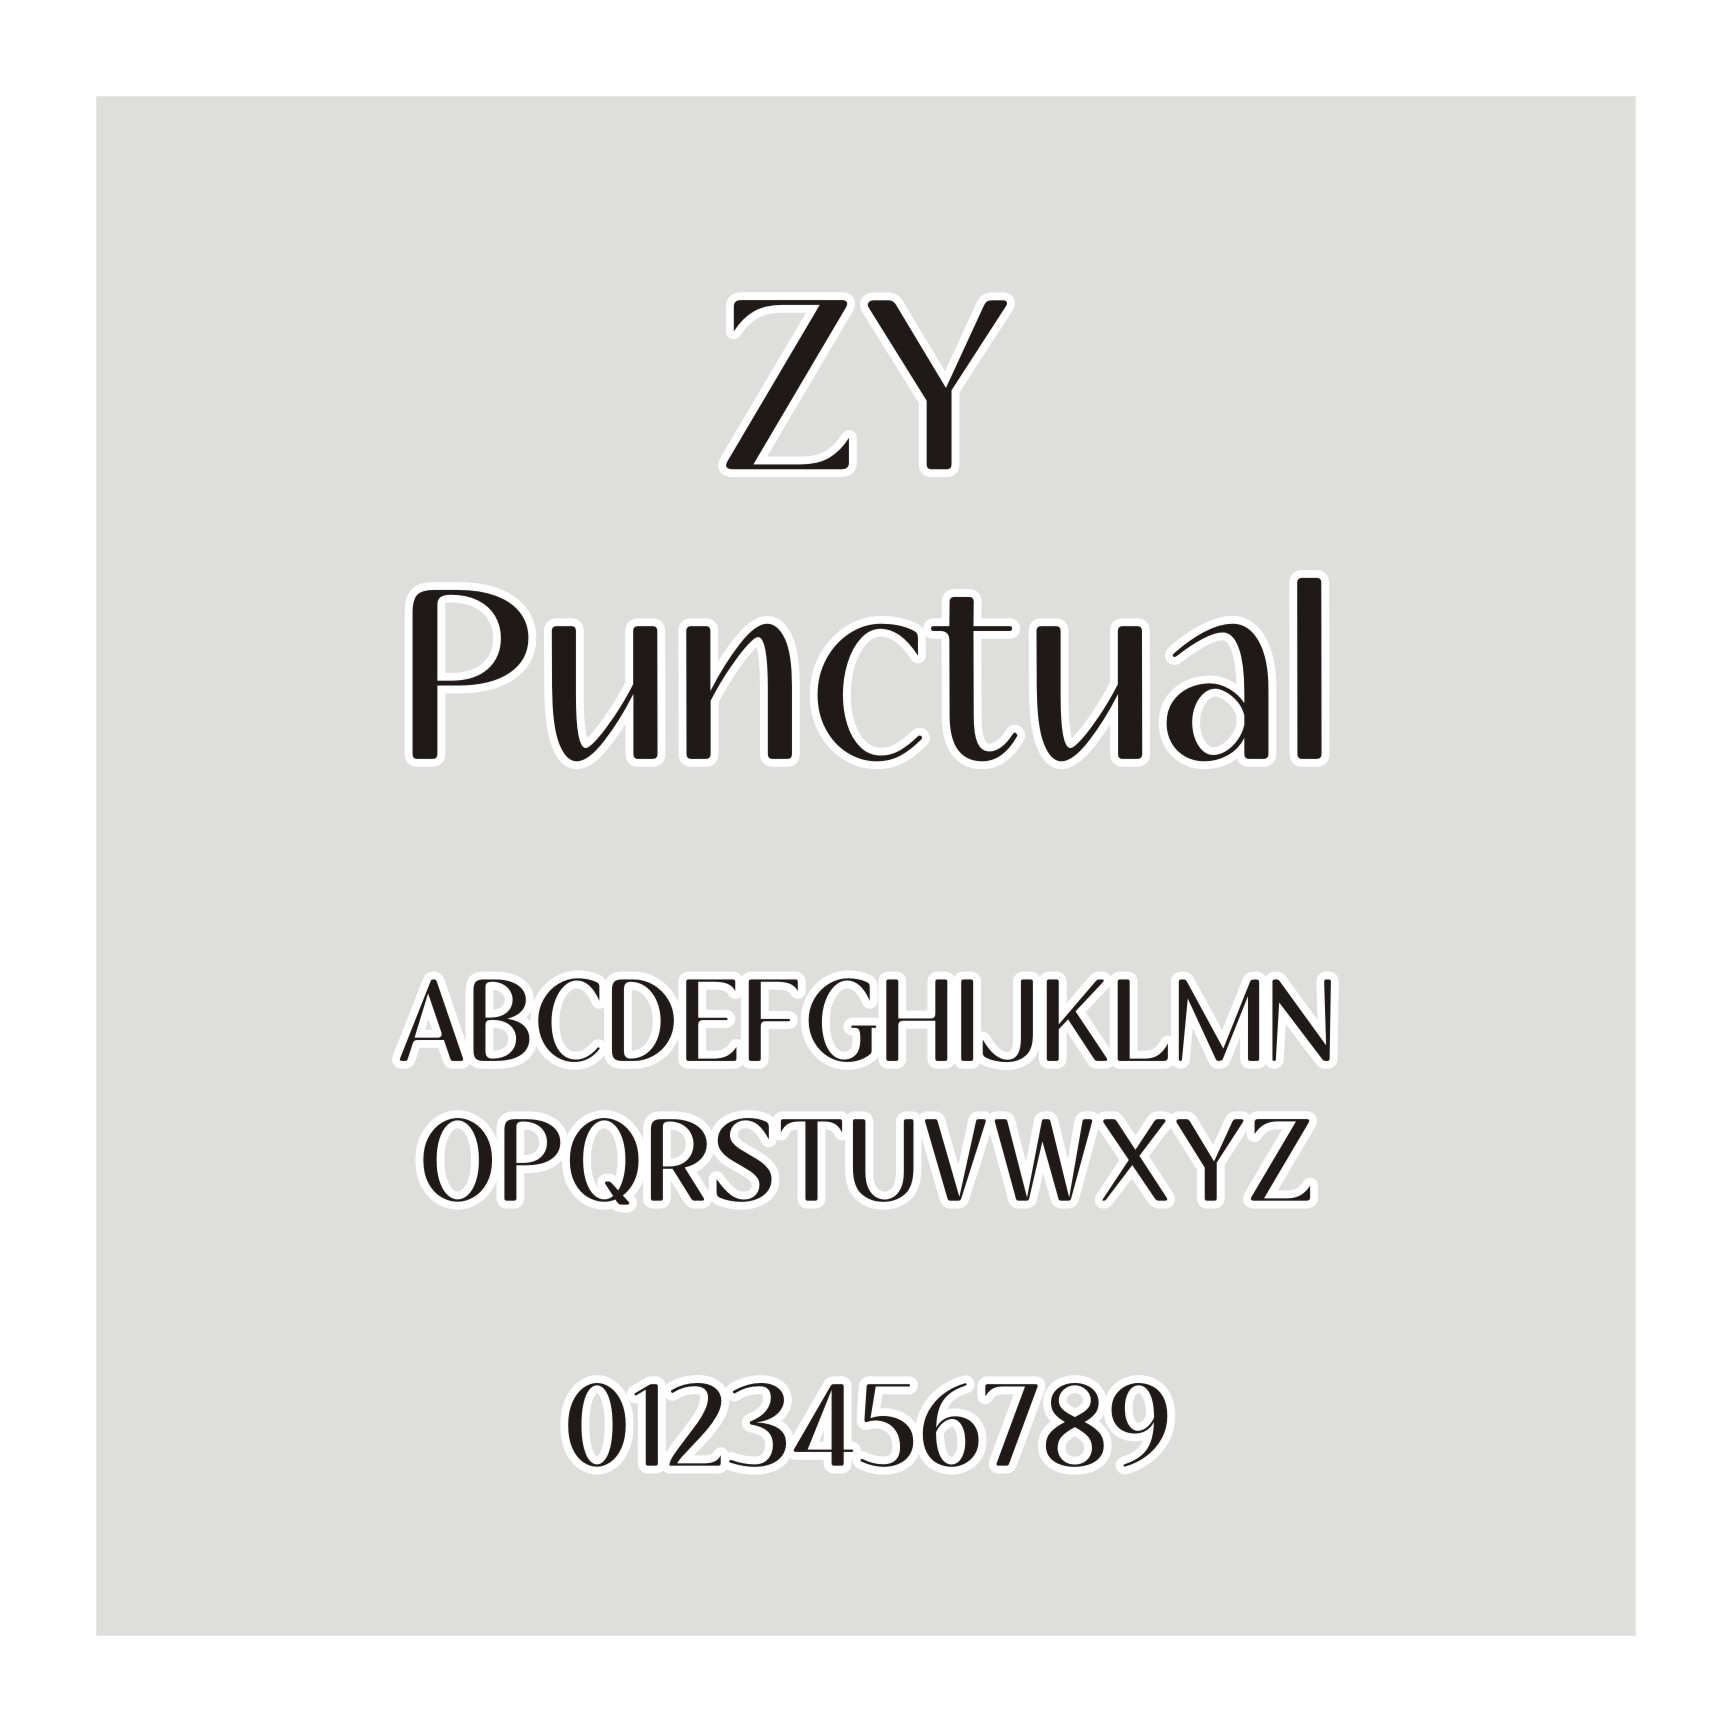 ZY Punctual